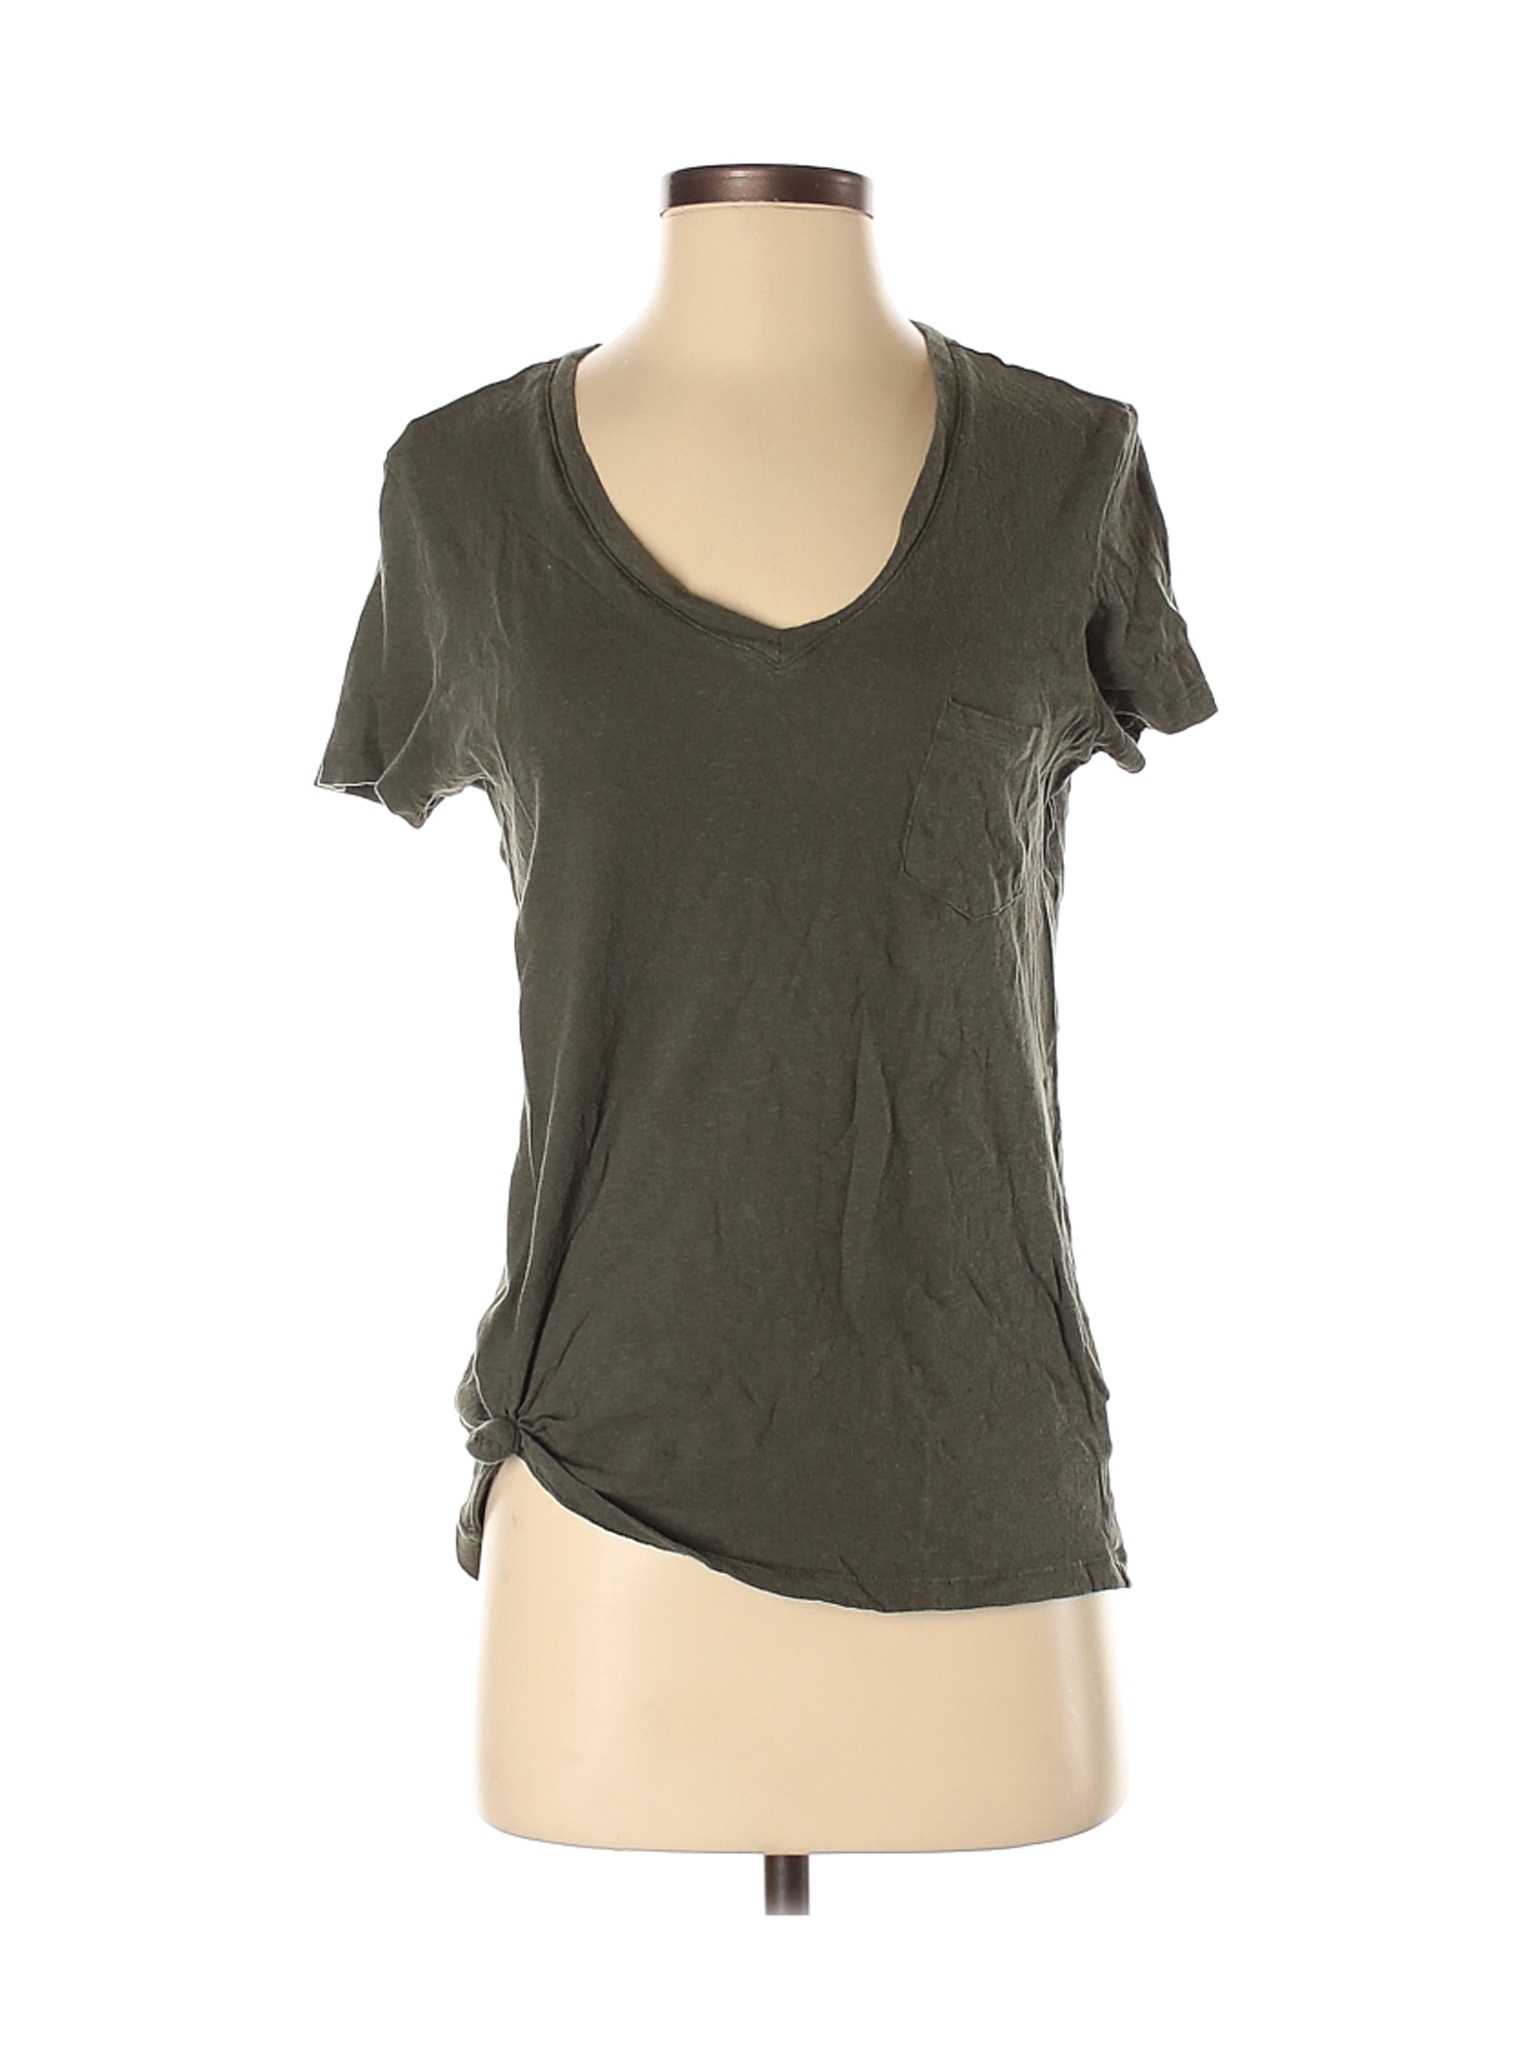 Universal Thread Women Green Short Sleeve T-Shirt S | eBay